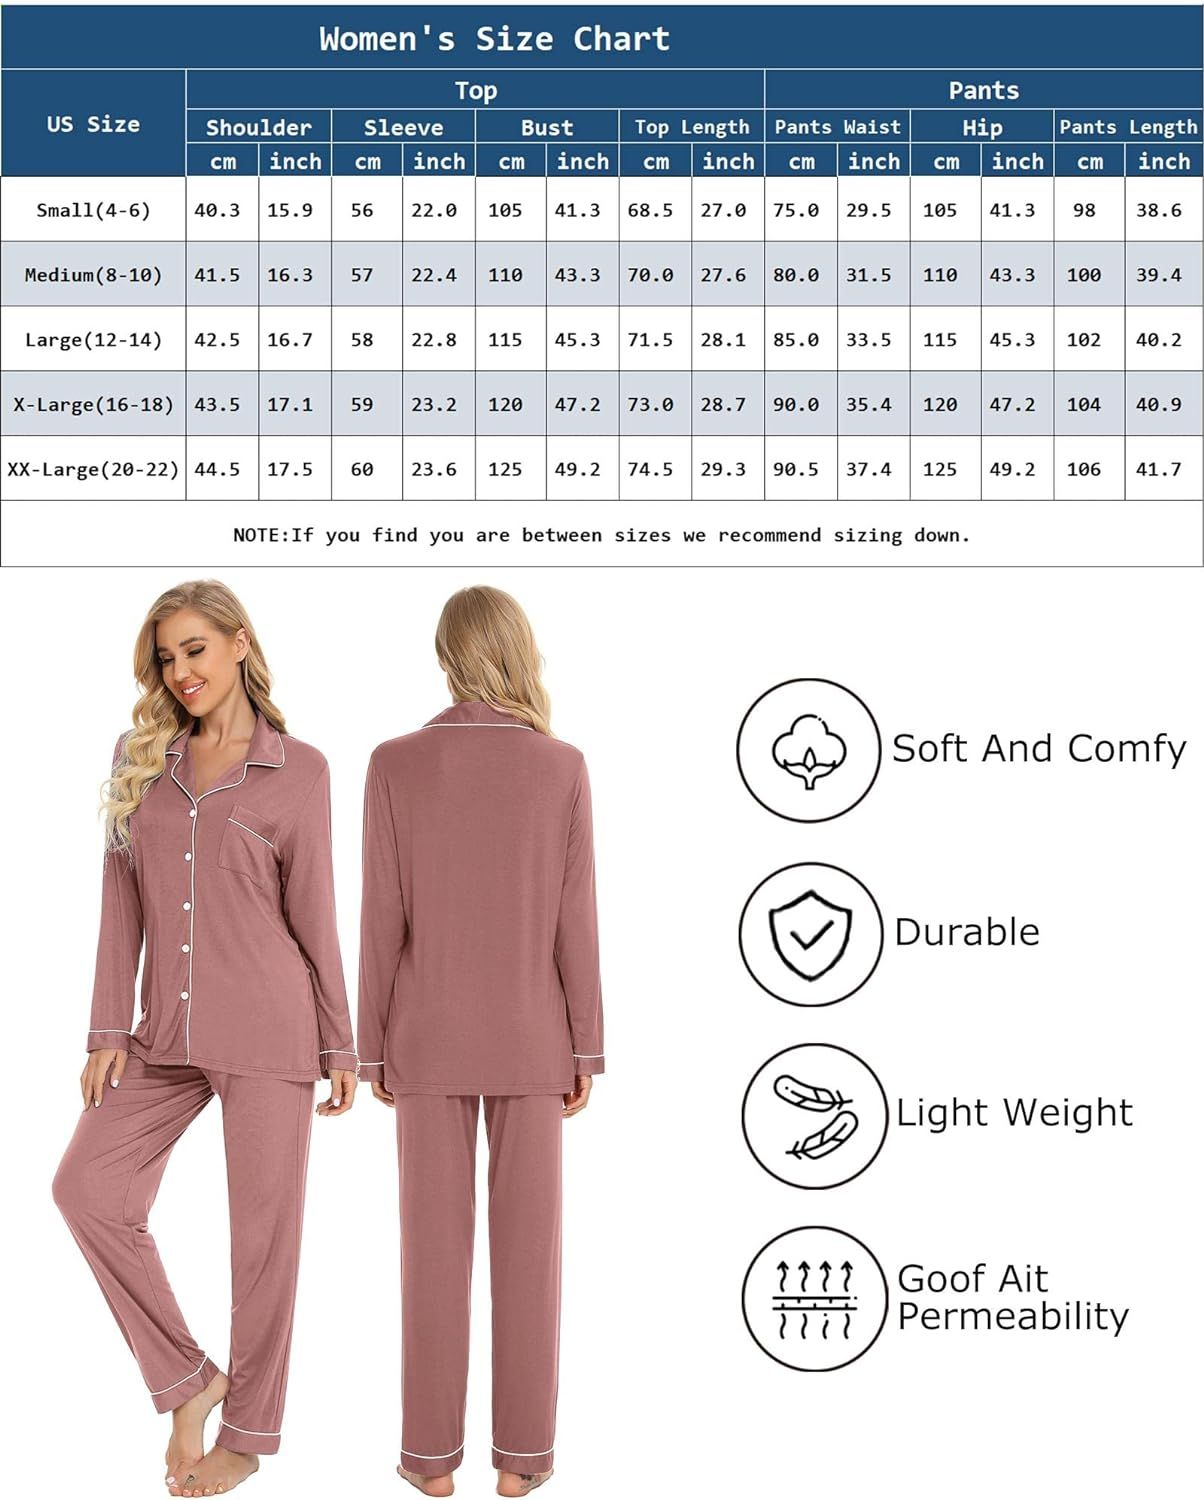 Leikar Button Up Pajama Set For Women Long Sleeve Shirt and Pajama Pants Soft Pjs Lounge Sets S-X... | Amazon (US)